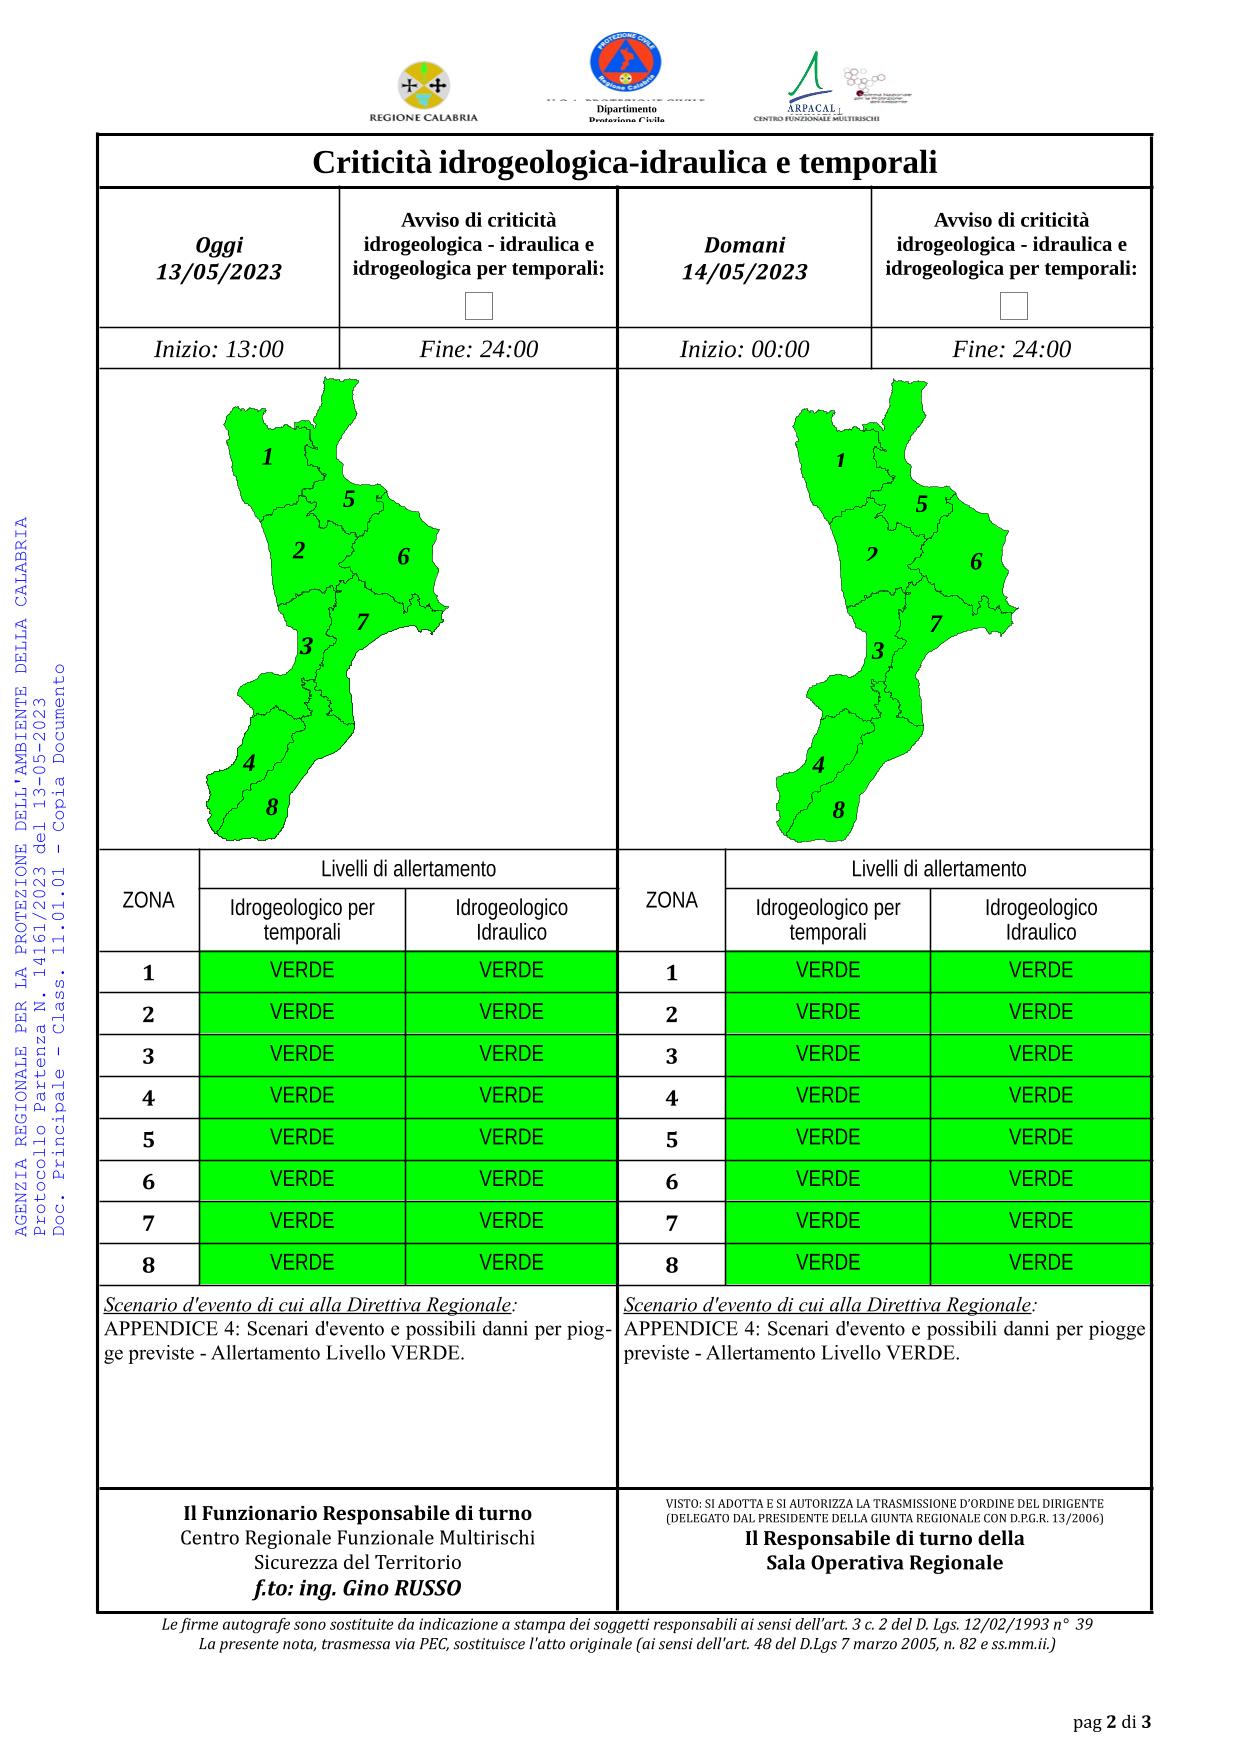 Criticità idrogeologica-idraulica e temporali in Calabria 13-05-2023